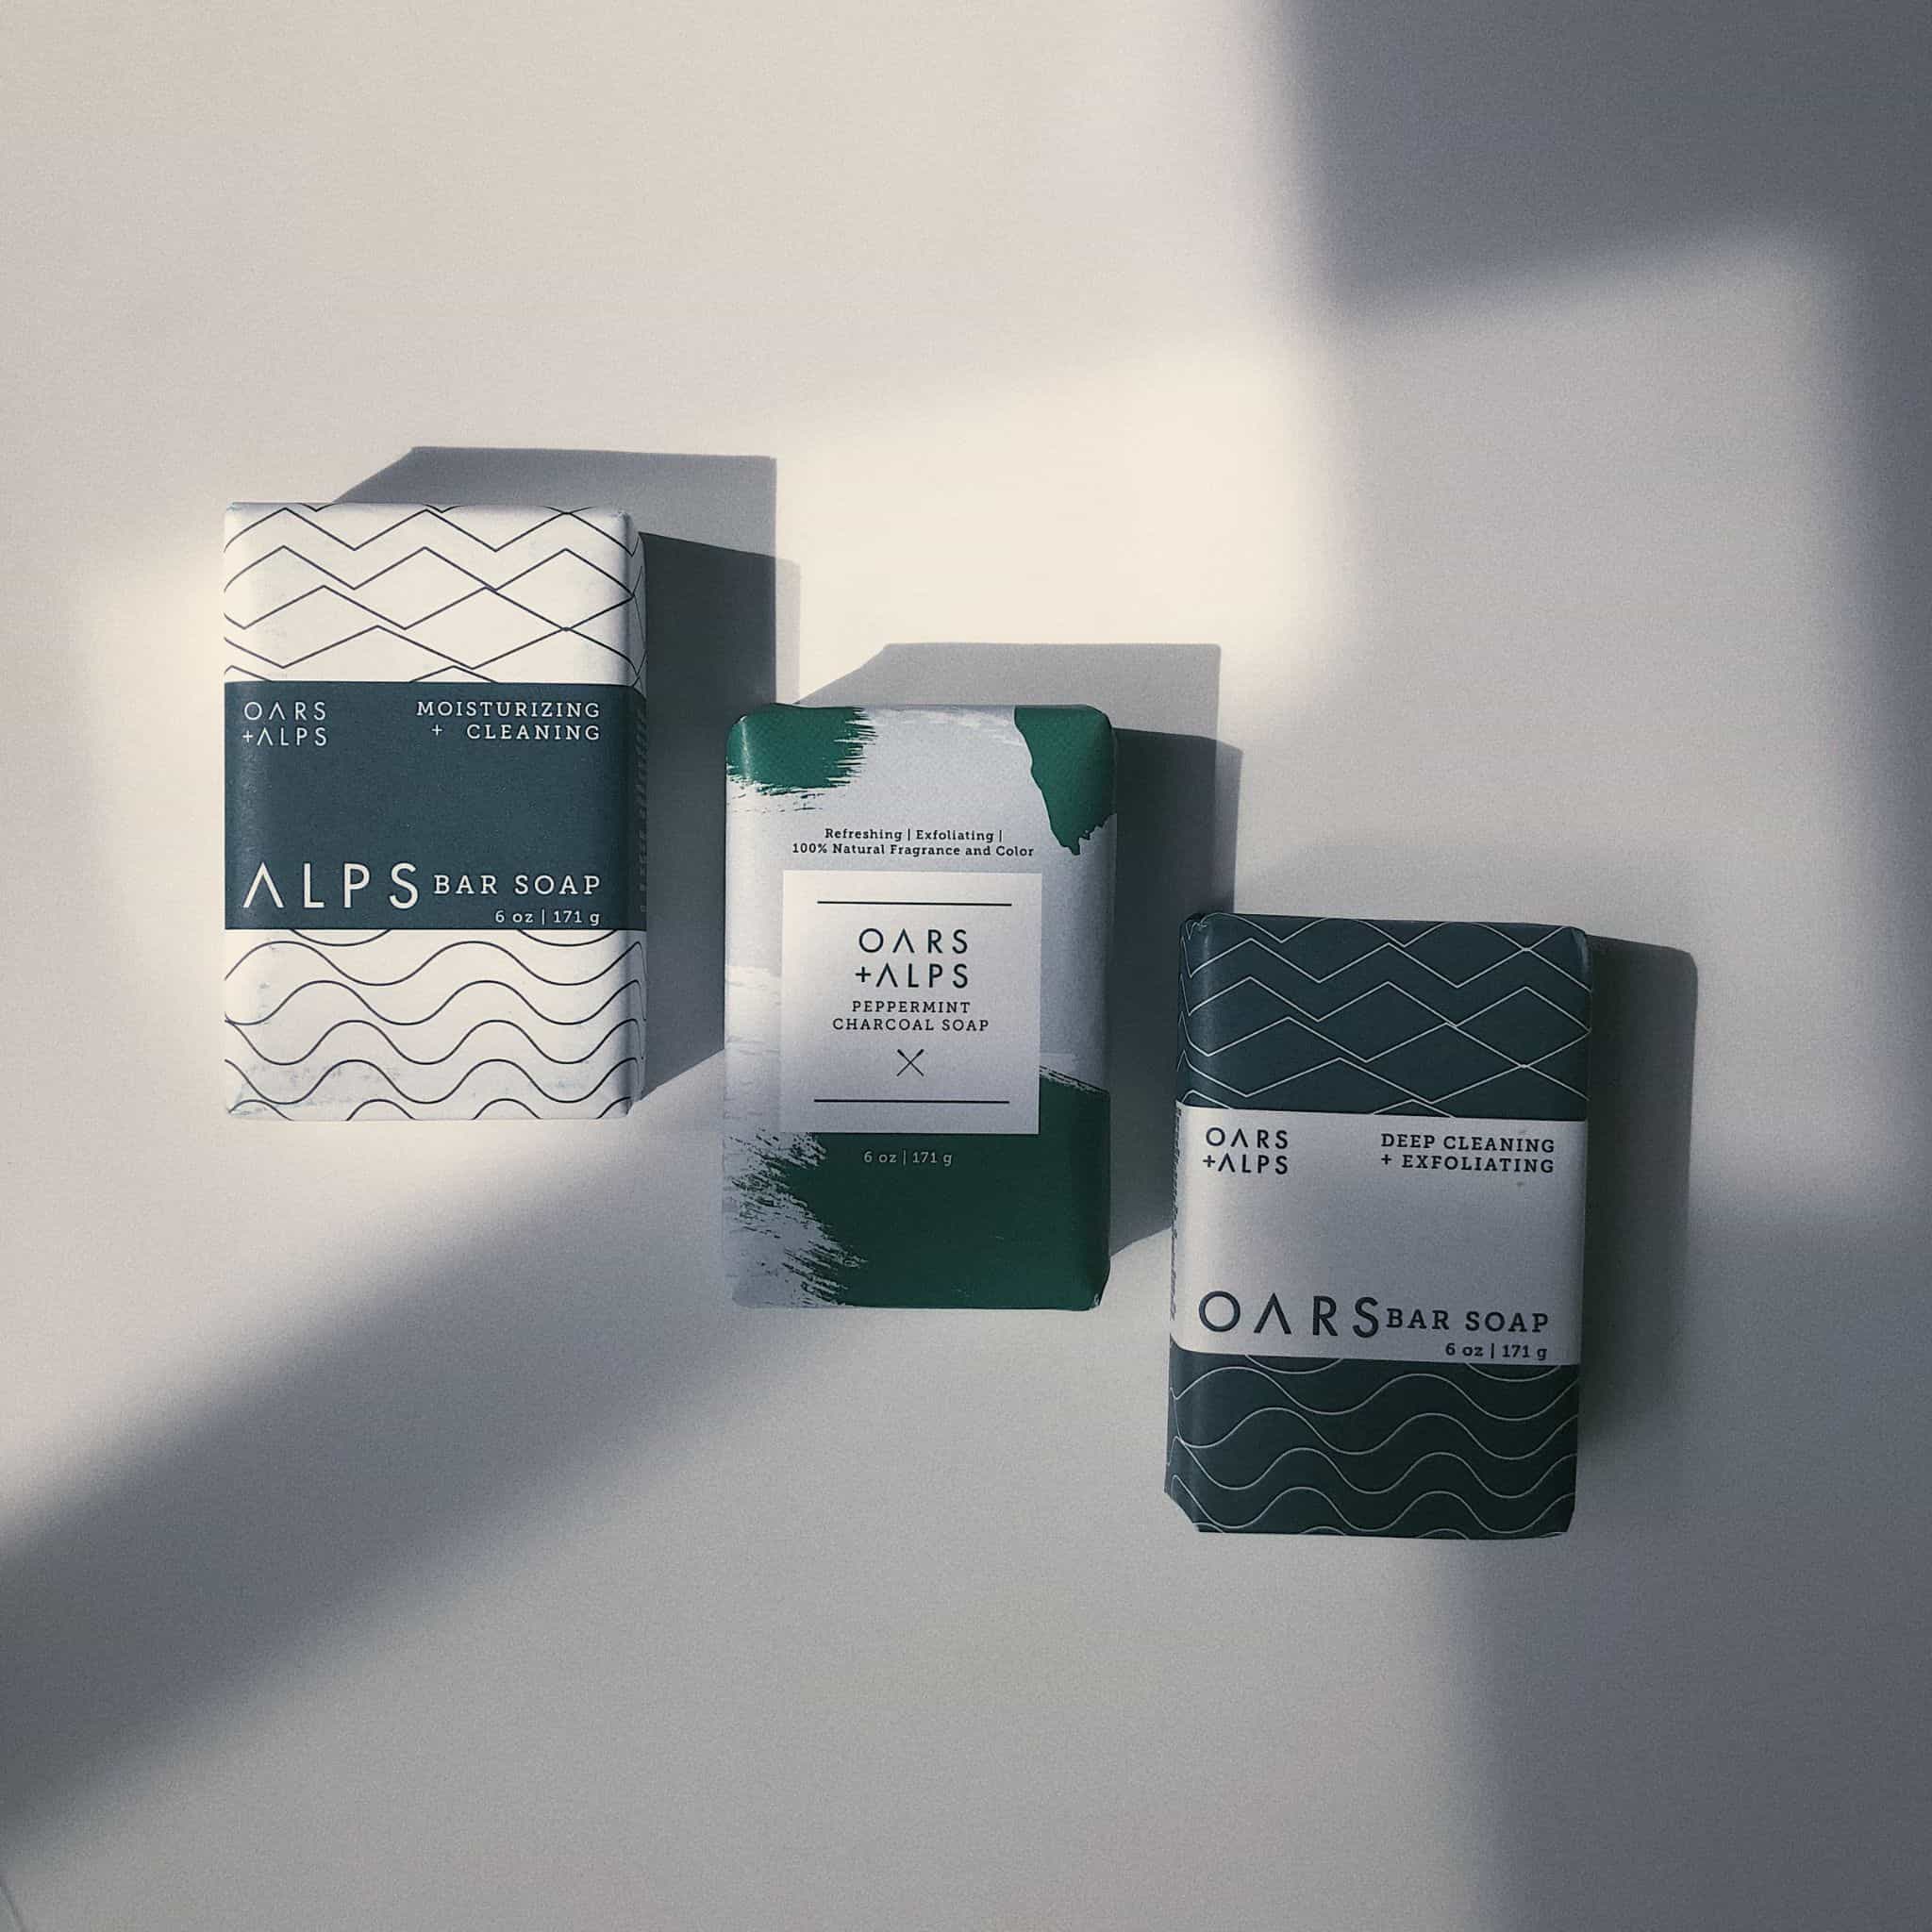 Oars + Alps Bar Soap, Fresh Ocean Scent - 6 oz